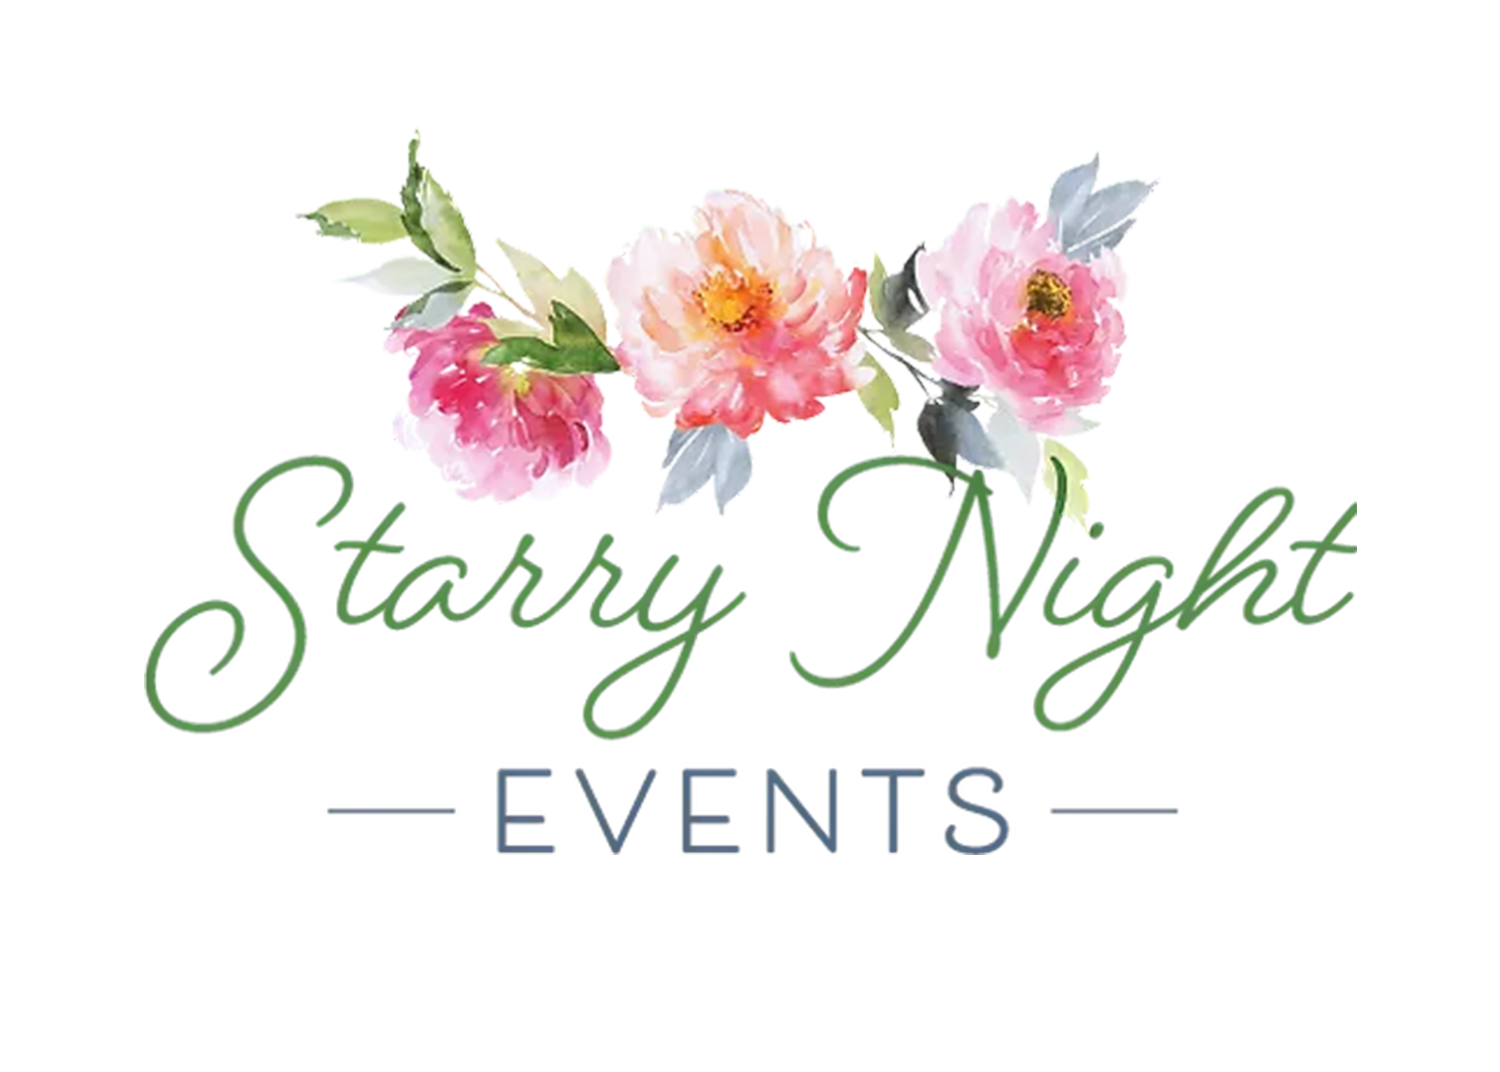 Starry night logo